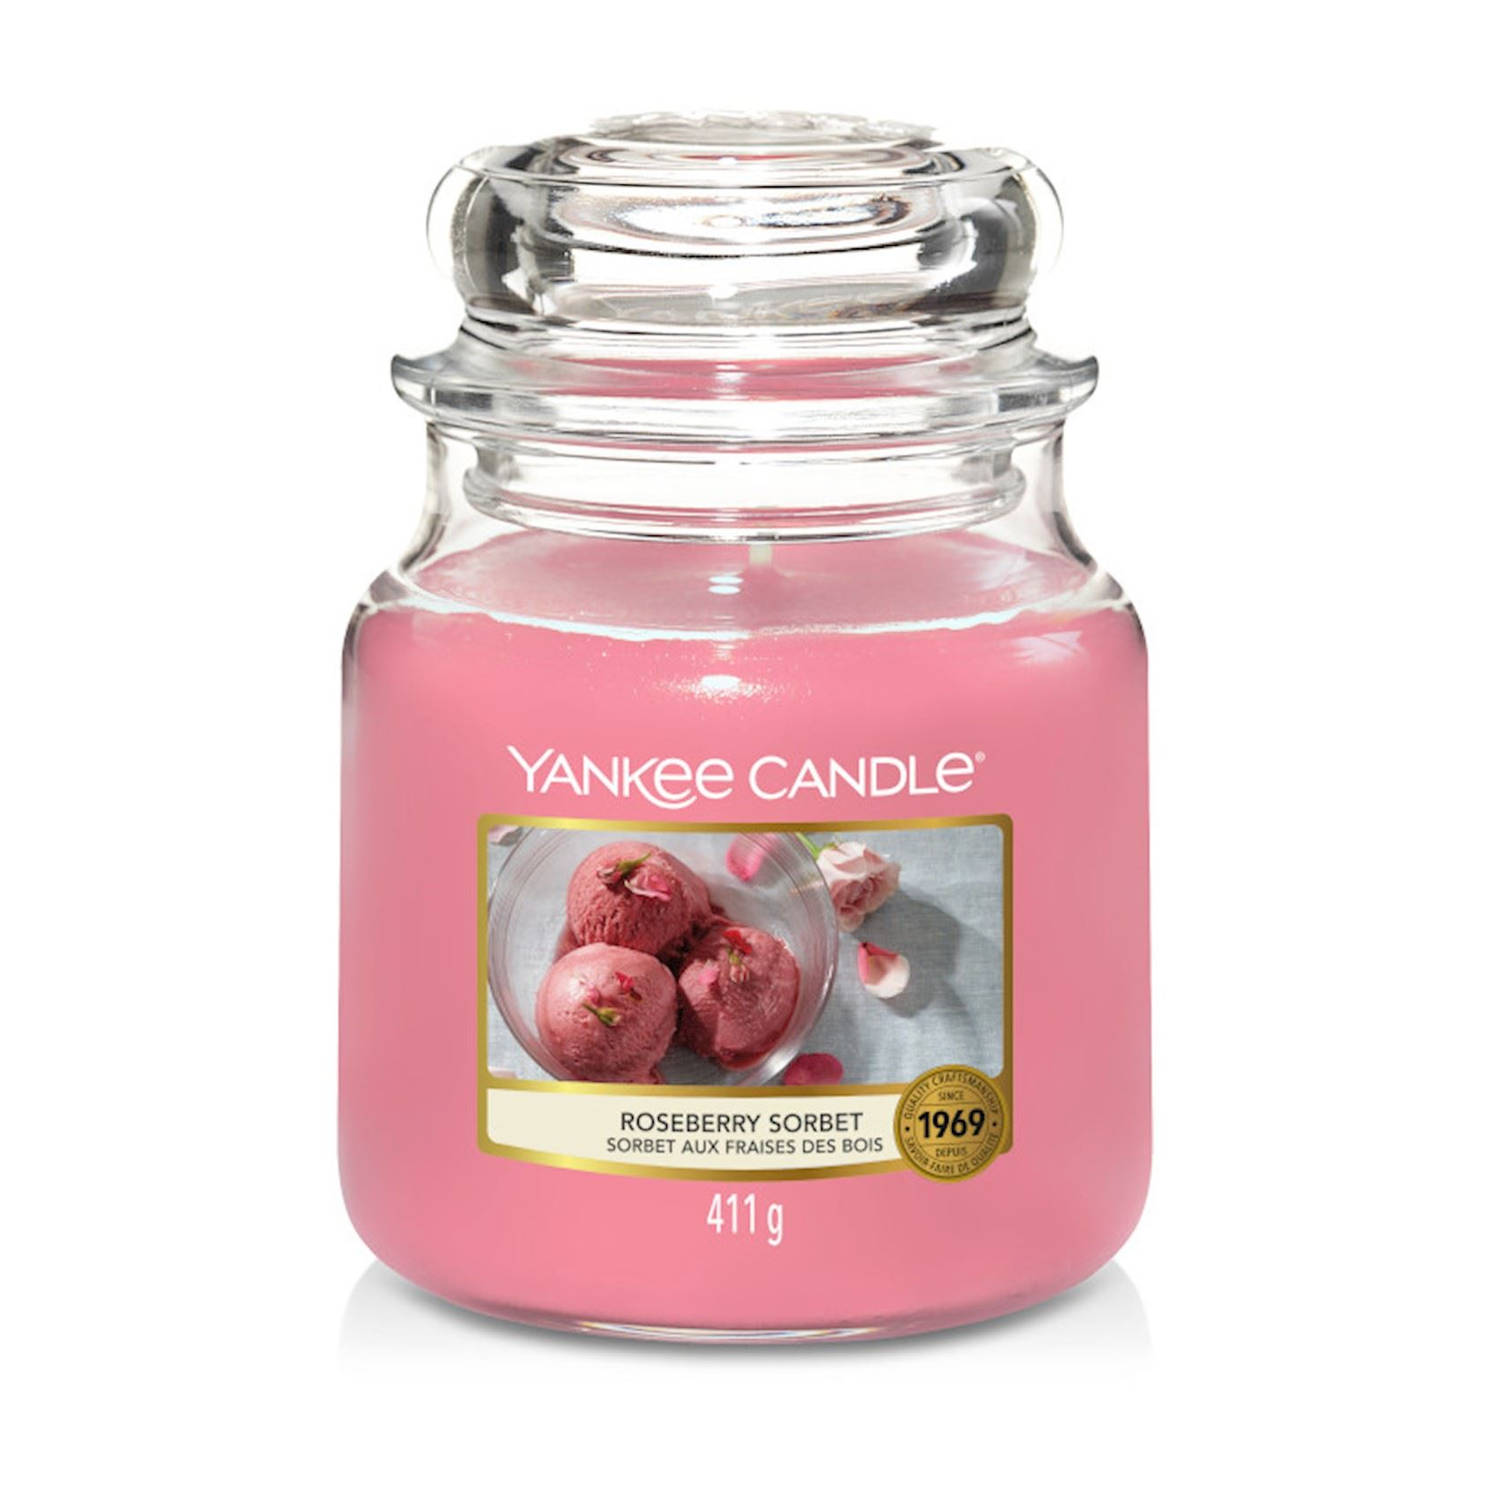 Yankee Candle - Roseberry Sorbet geurkaars - Medium Jar - Tot 75 branduren